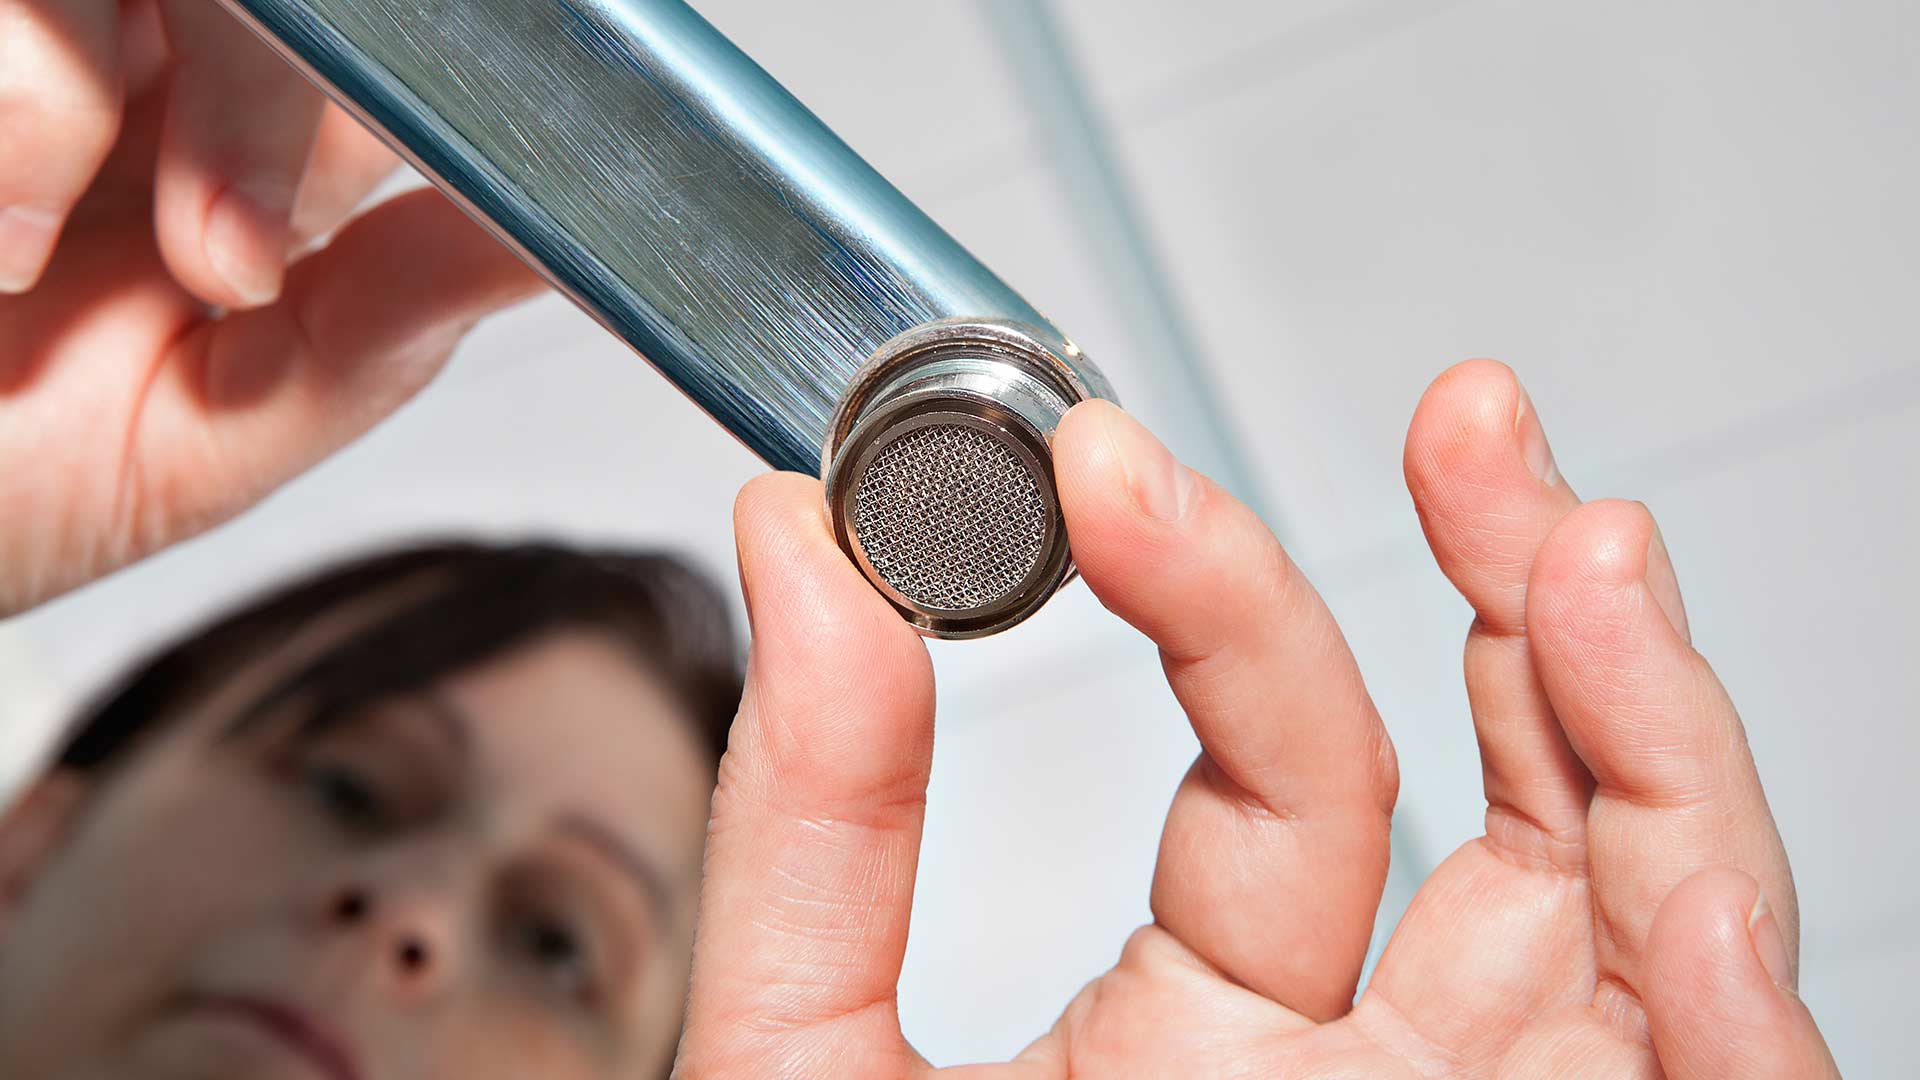 Woman unscrewing a faucet aerator.